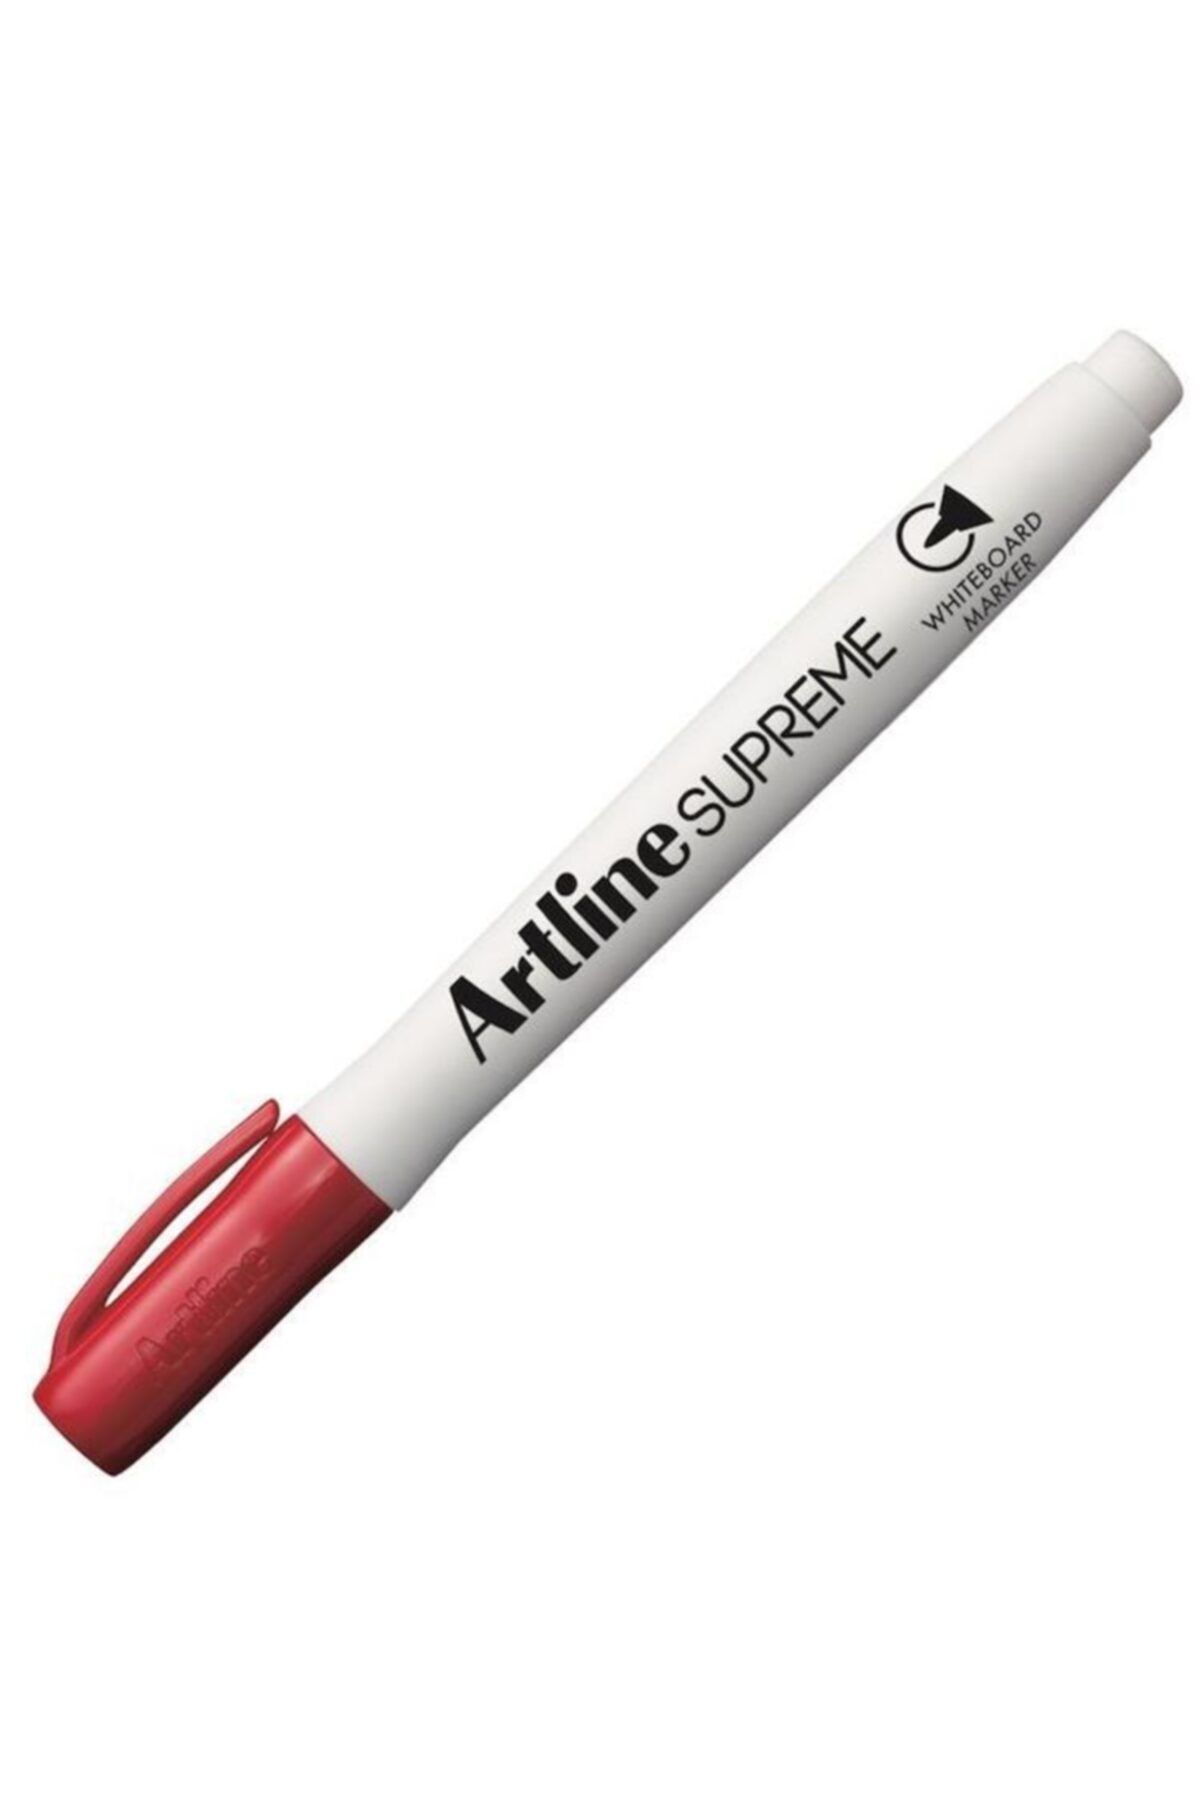 artline Artlıne Supreme Epf-507 Tahta Kalemi Kırmızı